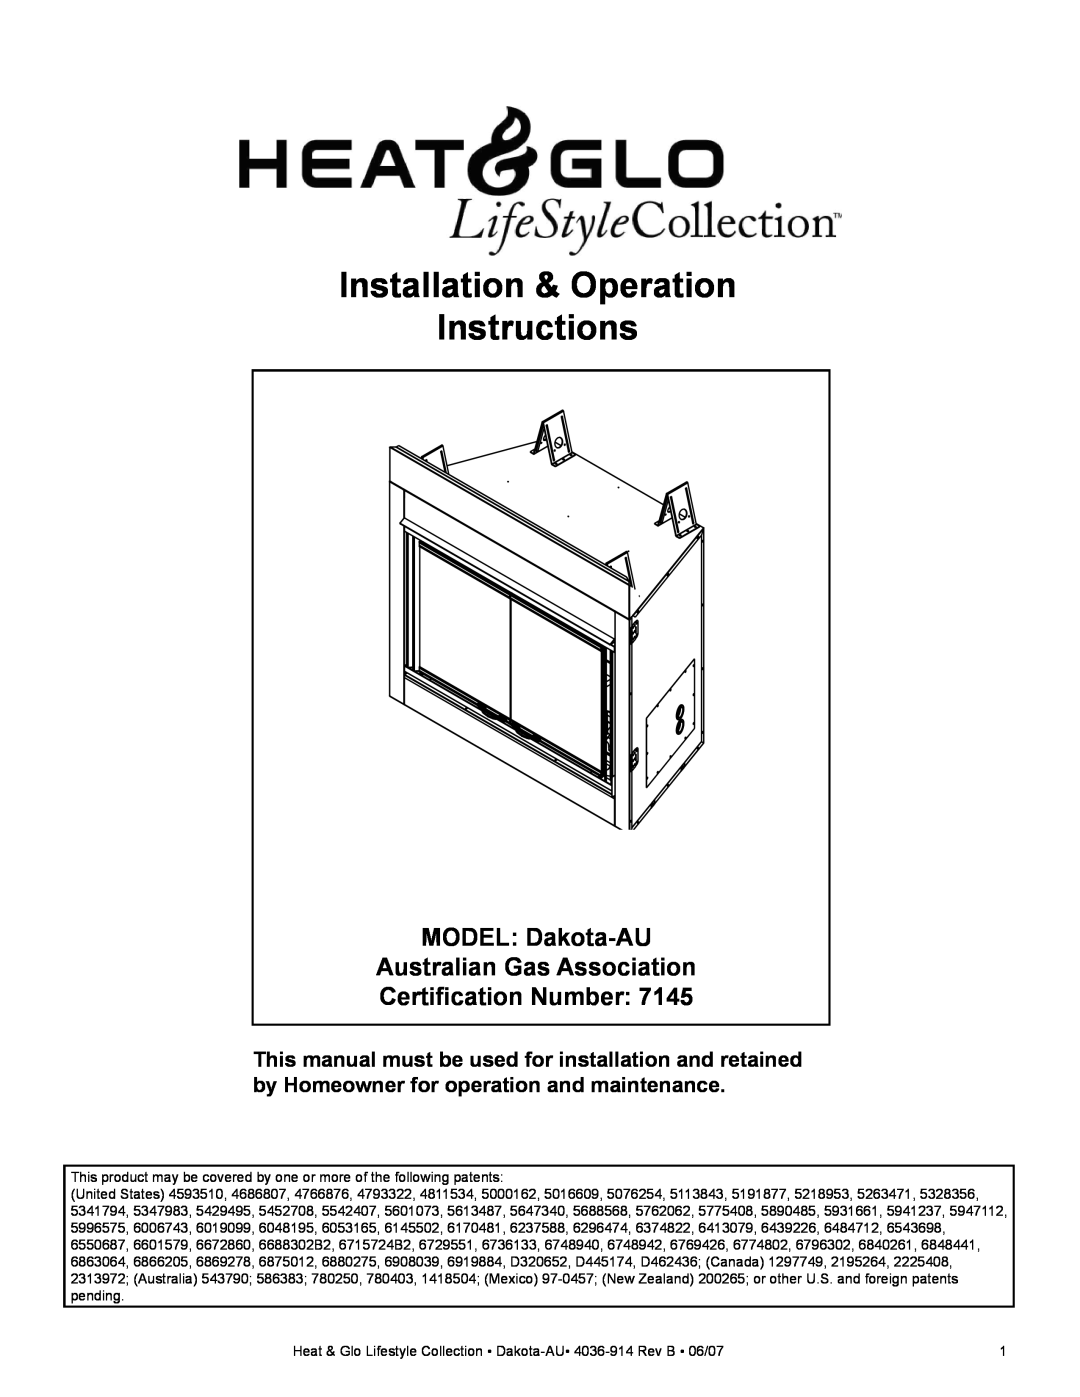 Heat & Glo LifeStyle DAKOTA-AU manual Installation & Operation Instructions, MODEL Dakota-AU, Australian Gas Association 